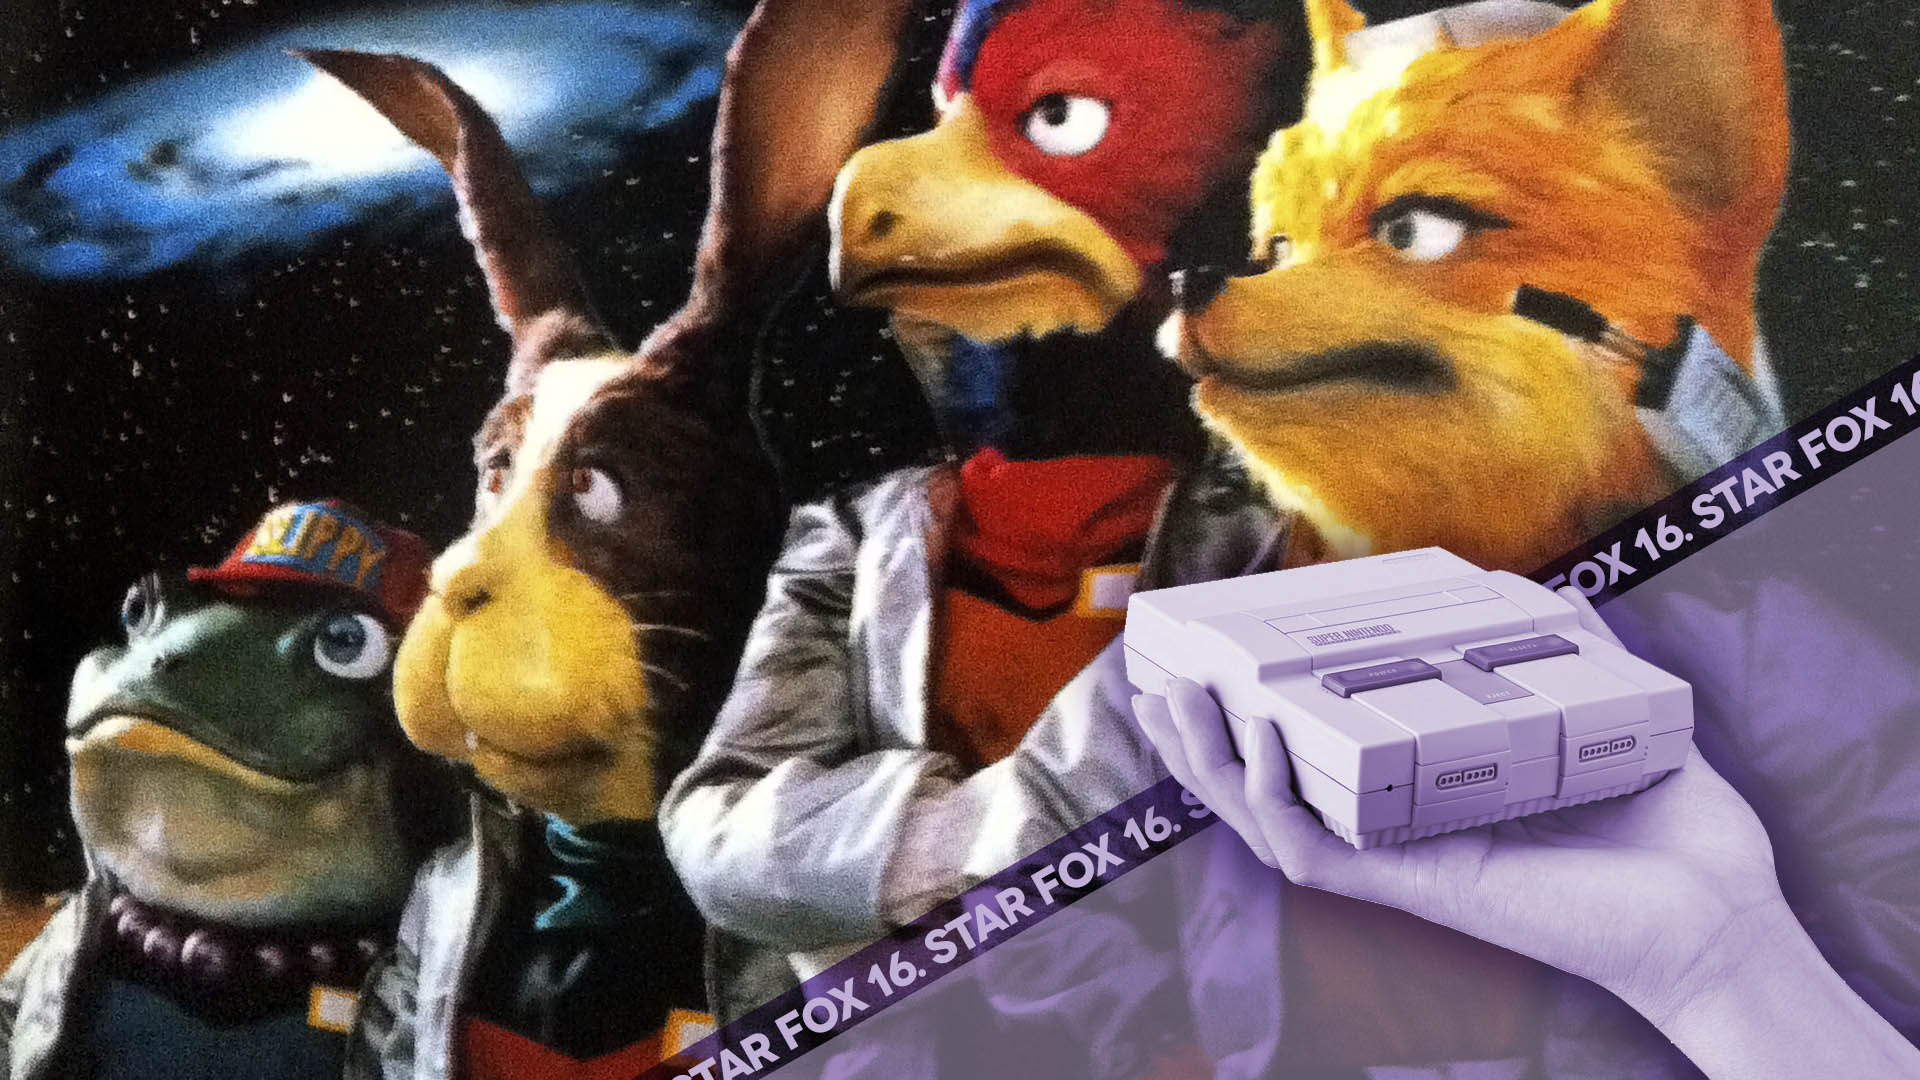 20 Years of Star Fox: The Great Moments - Page 4 of 4 - Nintendojo  Nintendojo